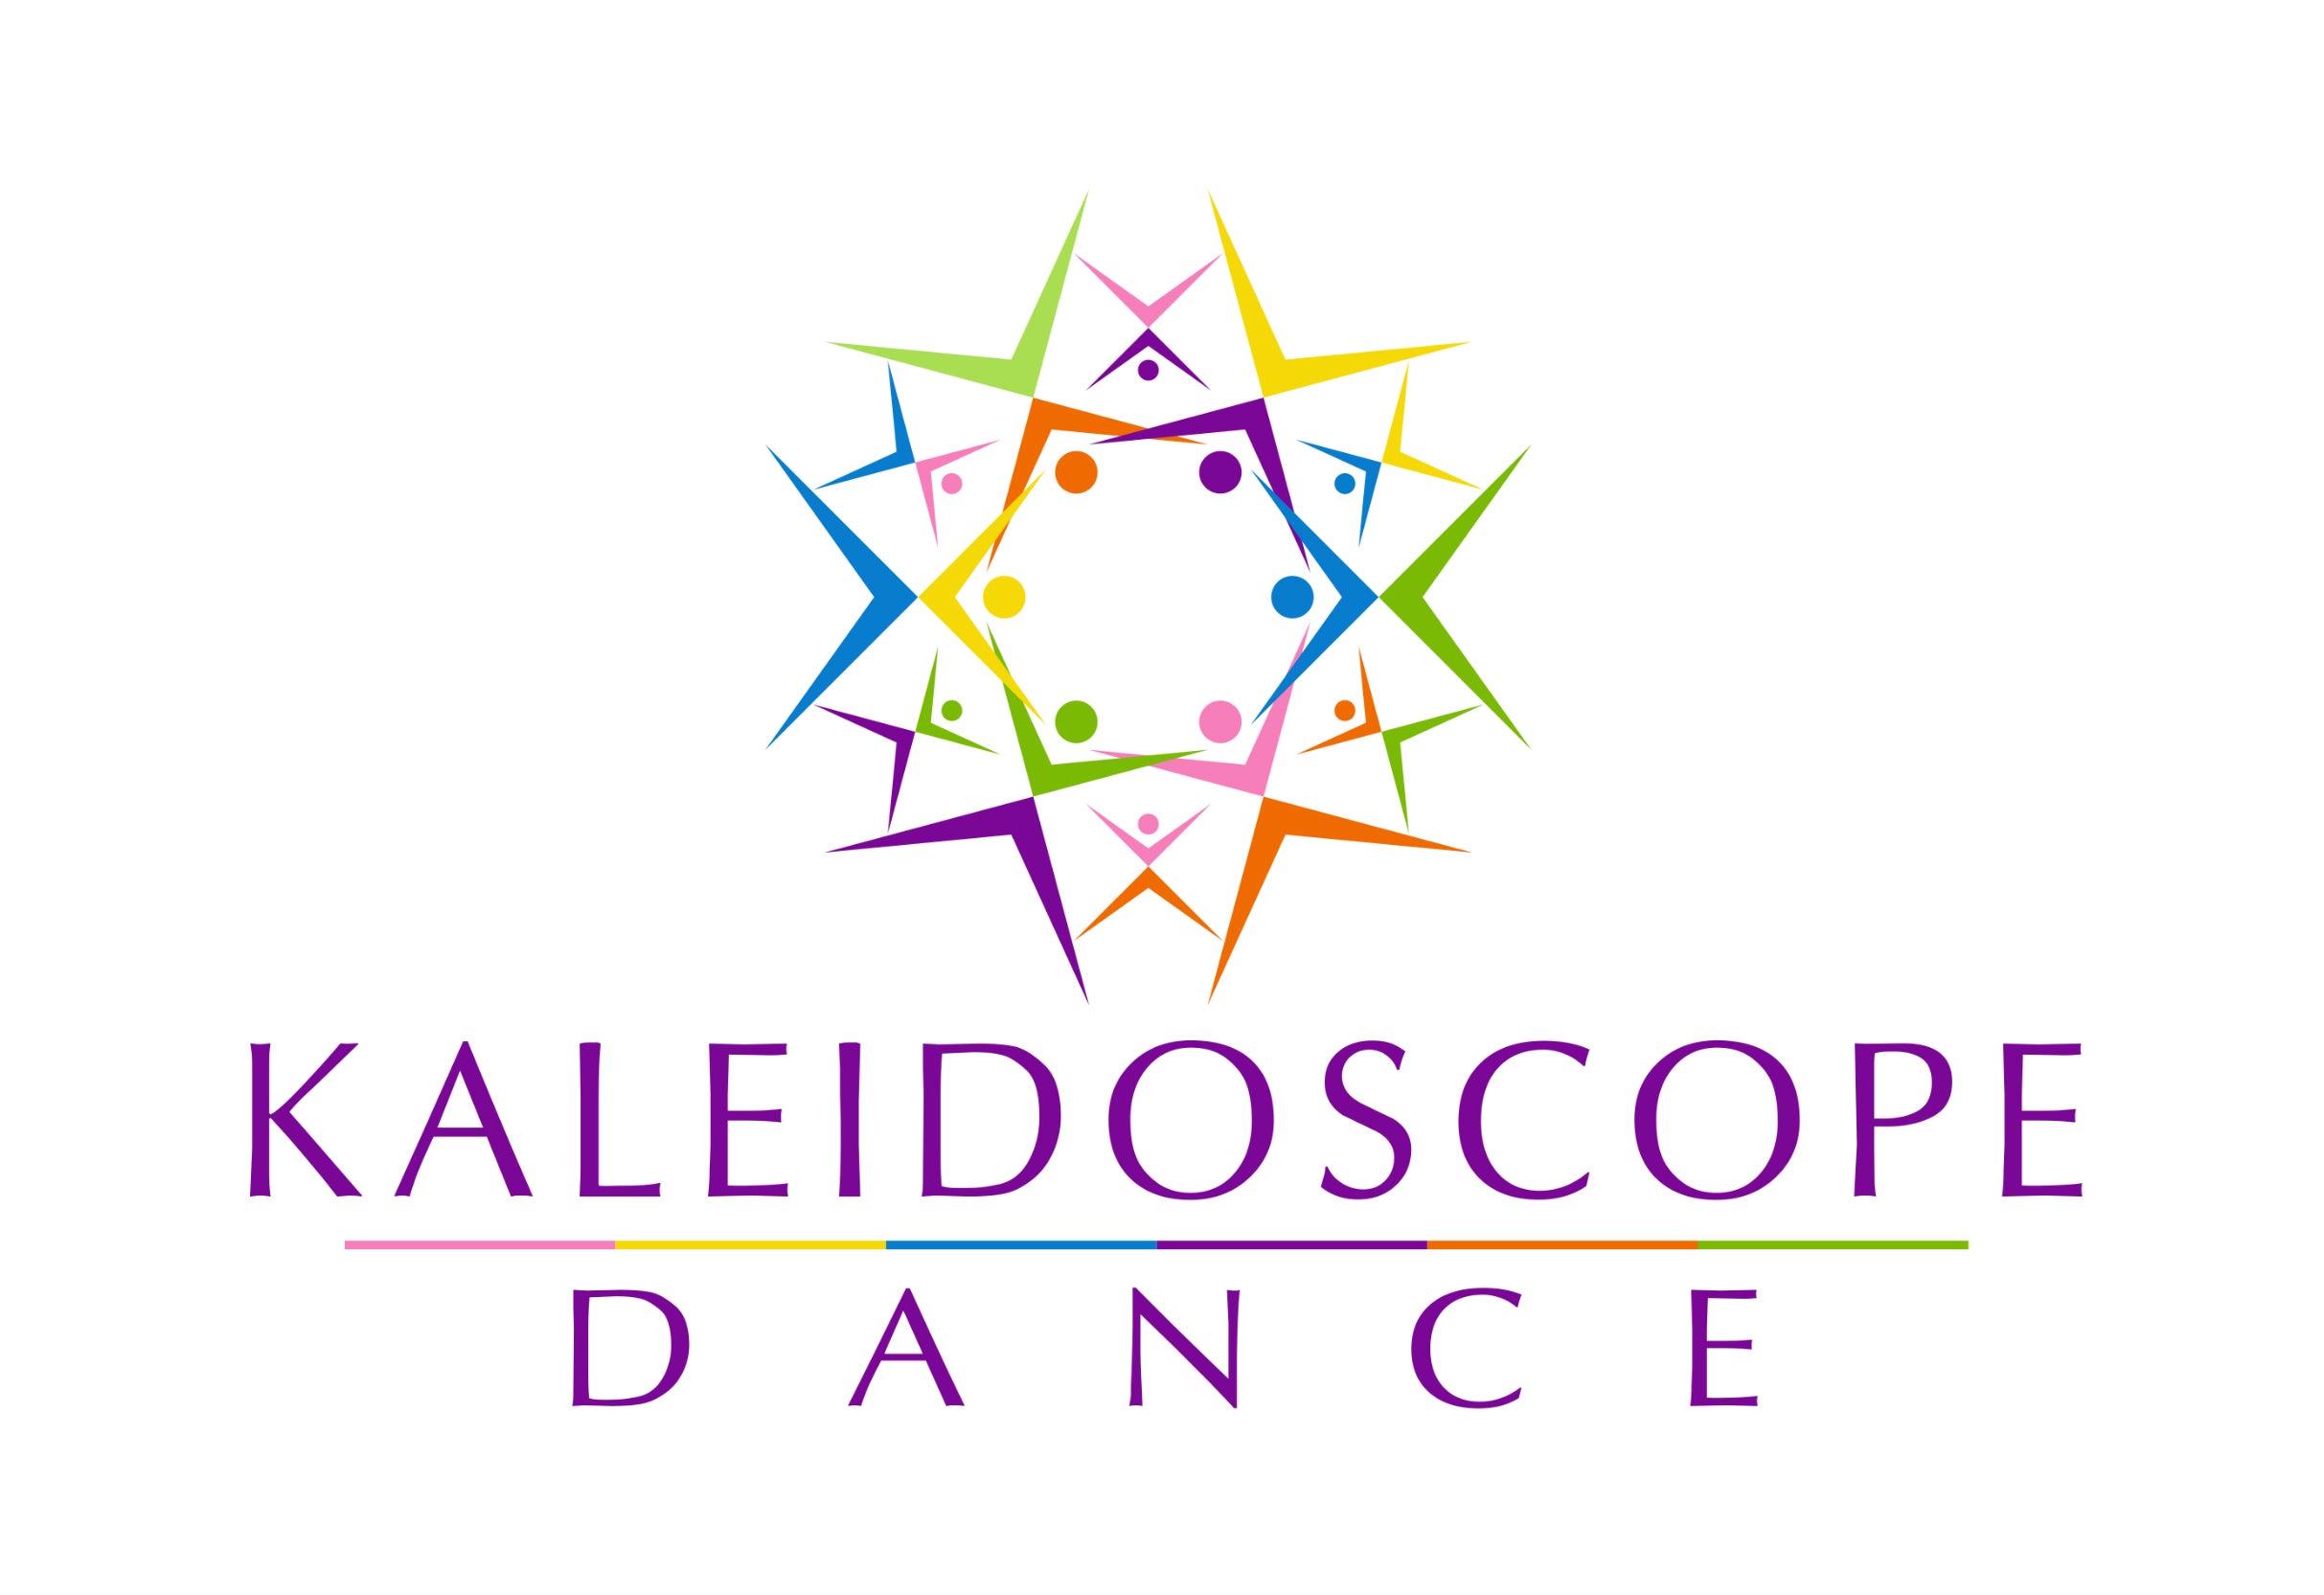 Kaleidoscope Dance in Skokie promo photo for multi presale offer code